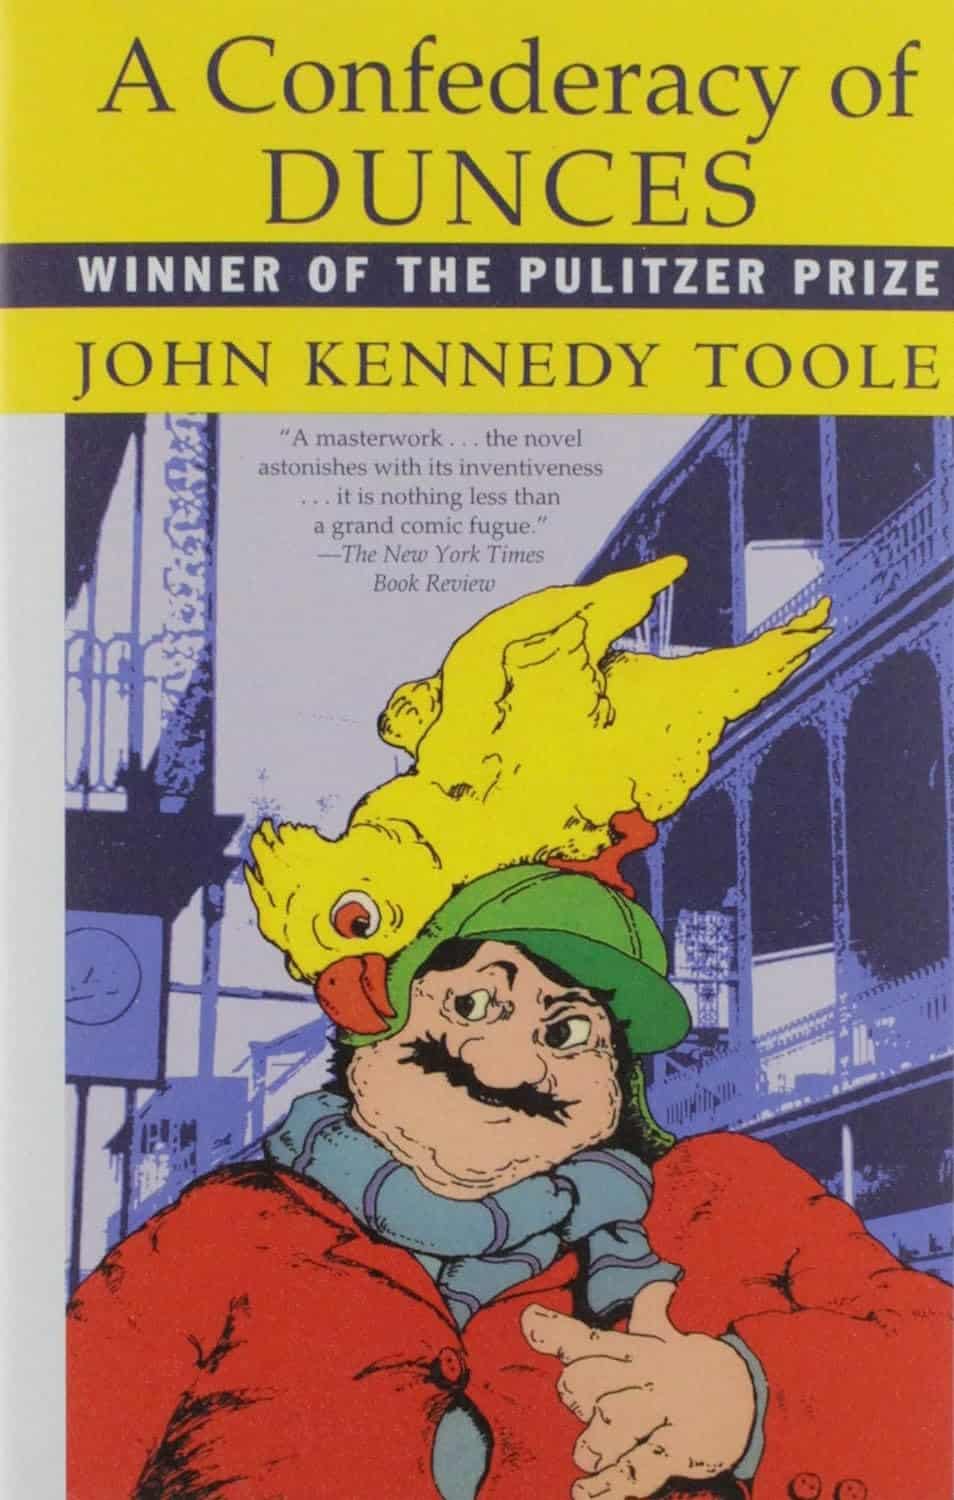 A Confederacy of Dunces by John Kennedy Toole (1980)